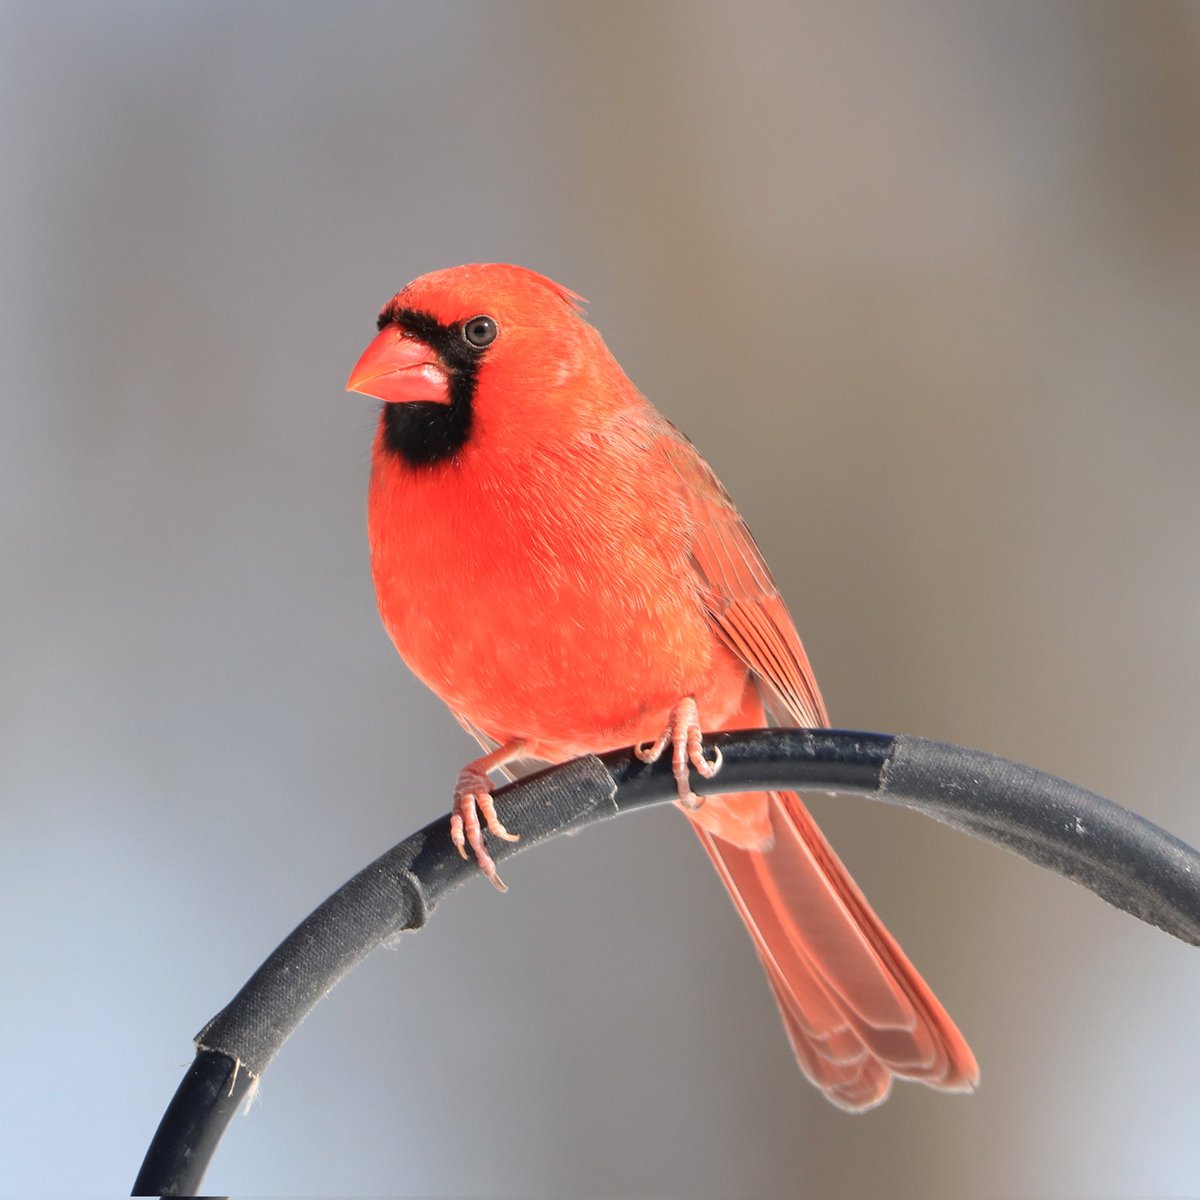 Cardinals always seem to look a bit... intense...
#cardinals #cardinal #intense #malecardinals #malecardinal #ohiobirdworld #ohiobirdlovers #ohiobirding #ohiobirdlife #beavercreekohio #beavercreek #beavercreekbirding #birding #ohiobirdworld #birdwatchers